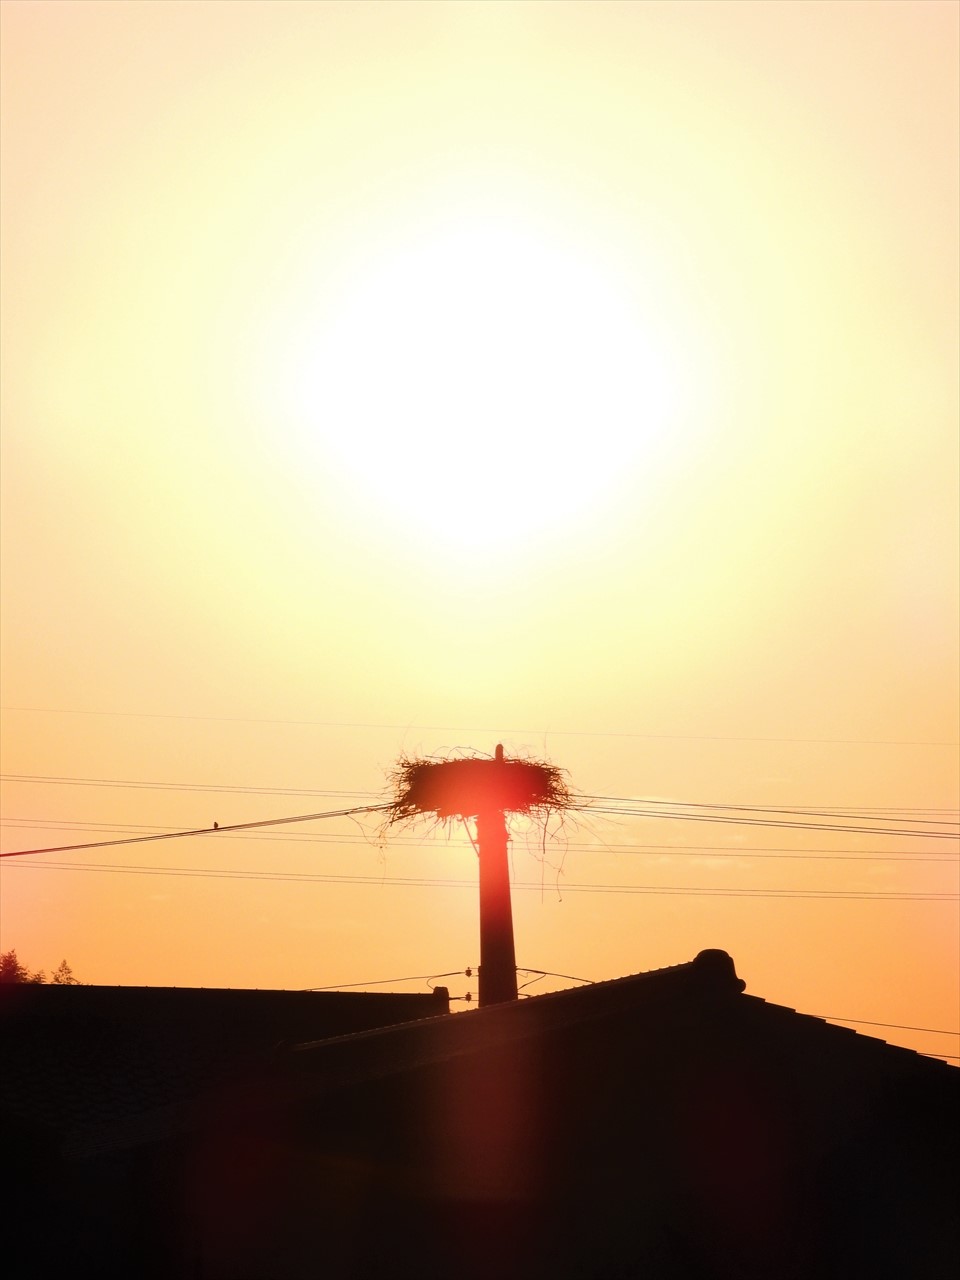 DSCN2236 (2)朝陽と巣塔のコウノトリ２０２１年３月１９日AM６：４９